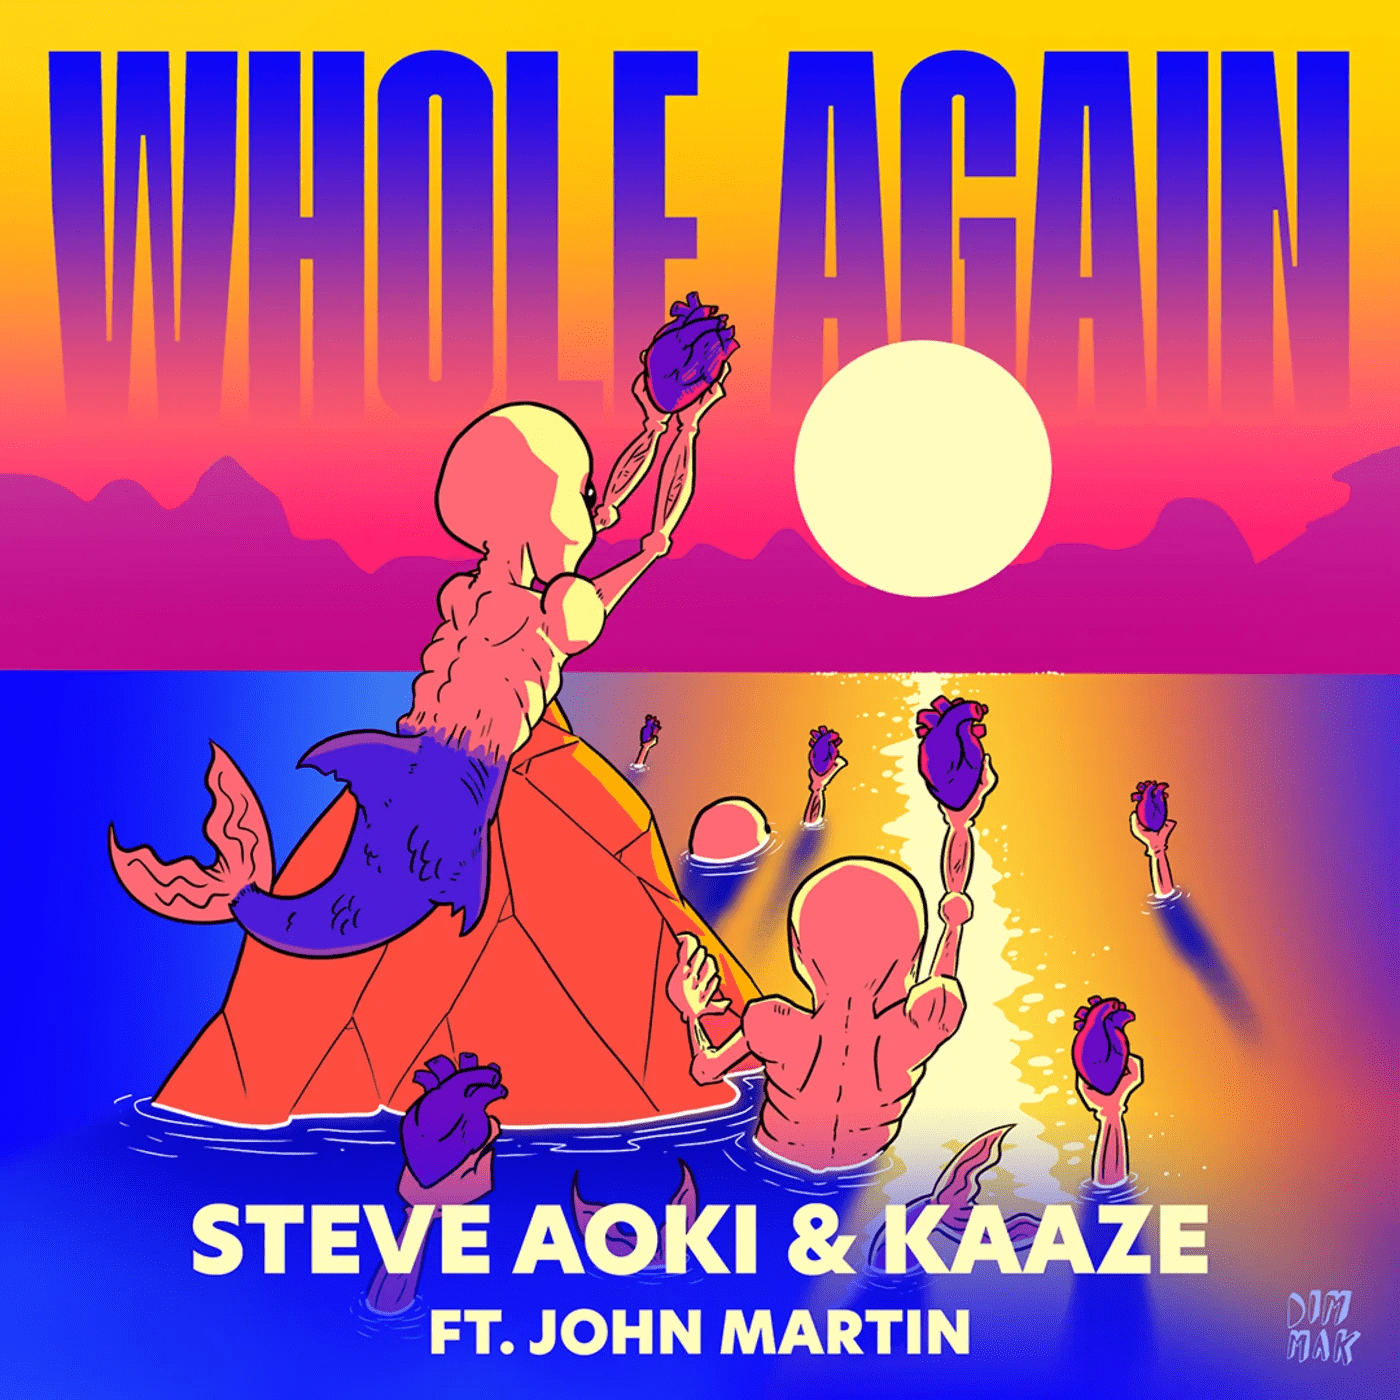 Steve Aoki & KAAZE – Whole Again ft. John Martin